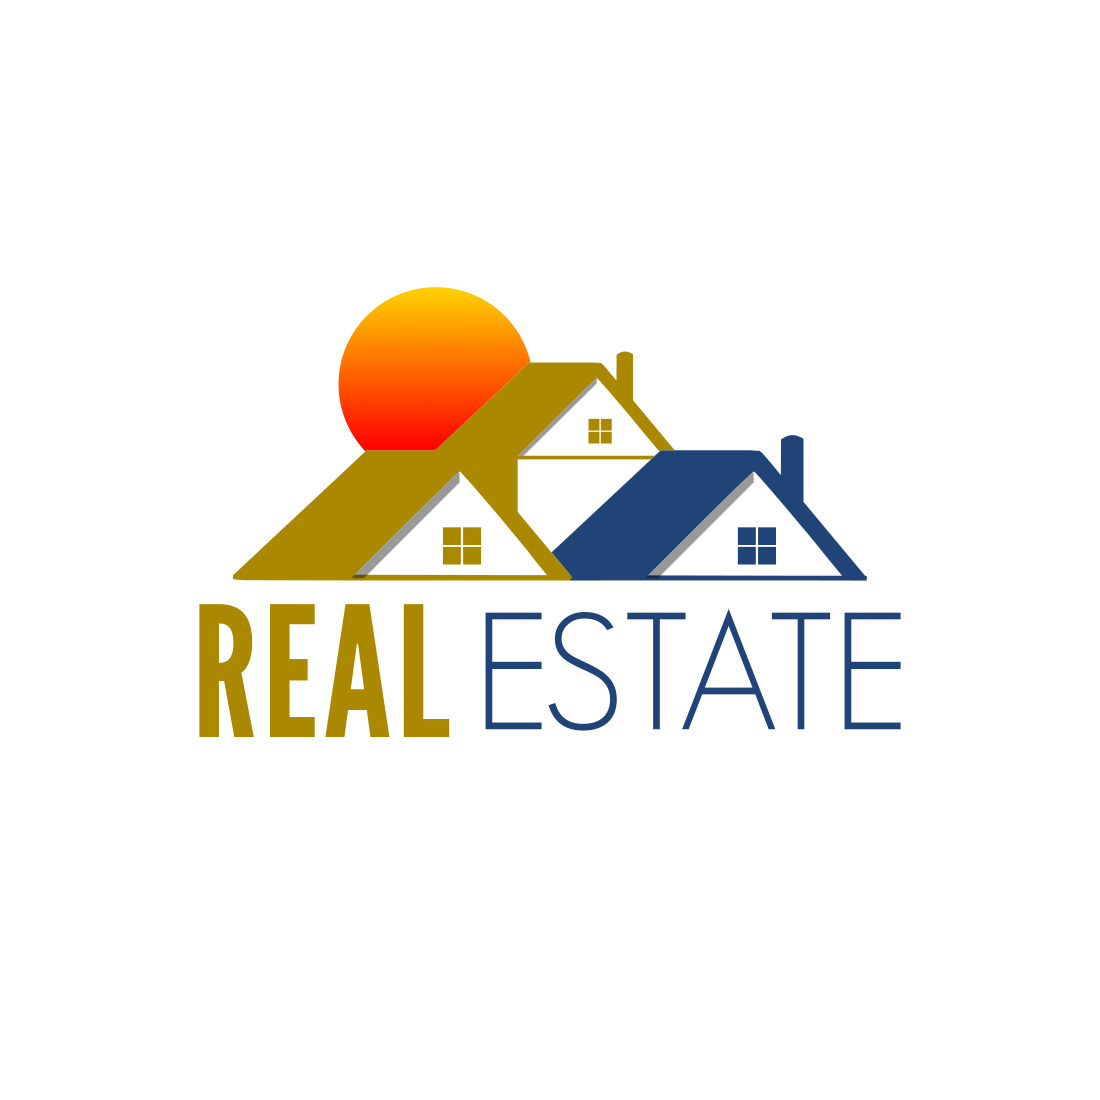 Real Estate Business Logo Design Template previews.